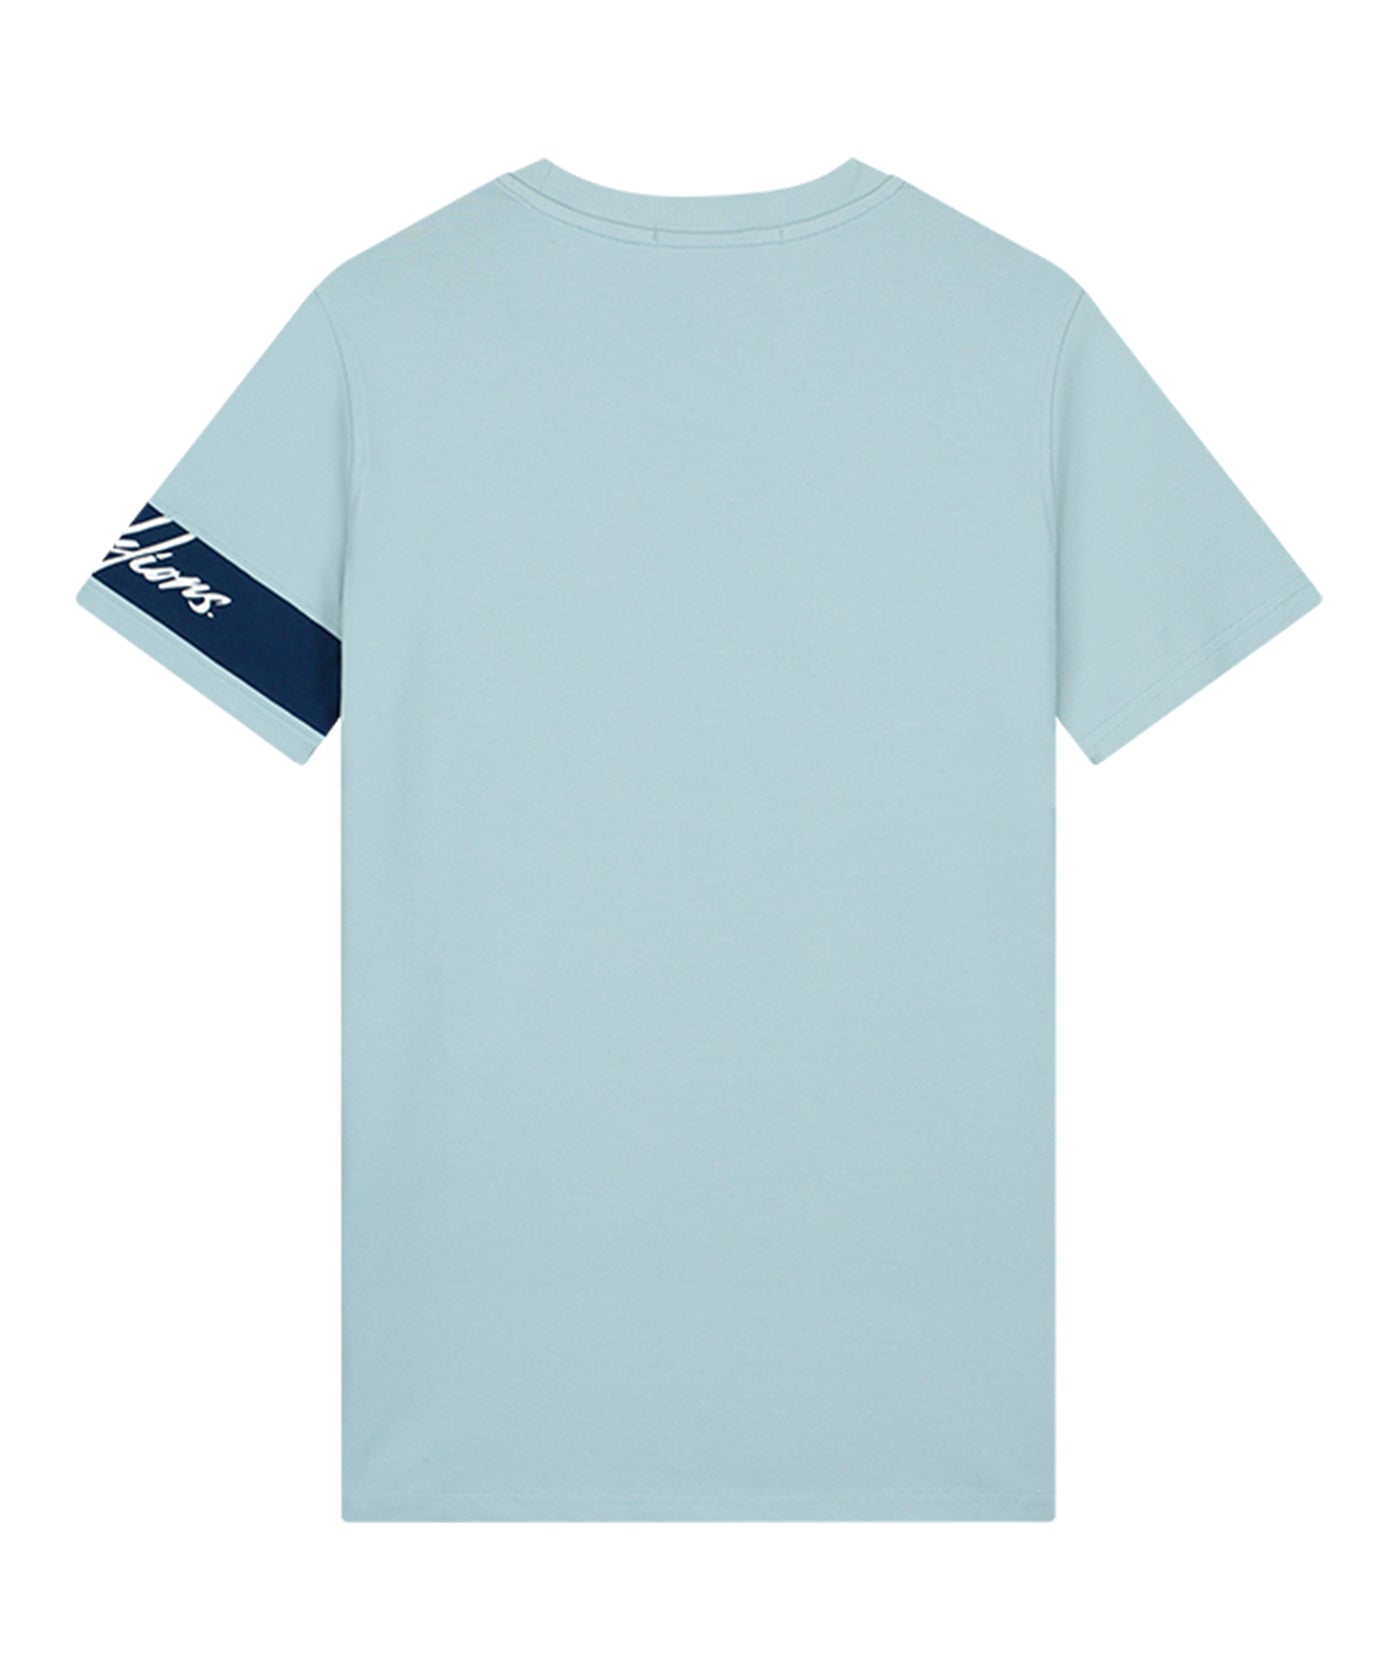 Malelions - Captain - T-shirt - Lt Blue/navy